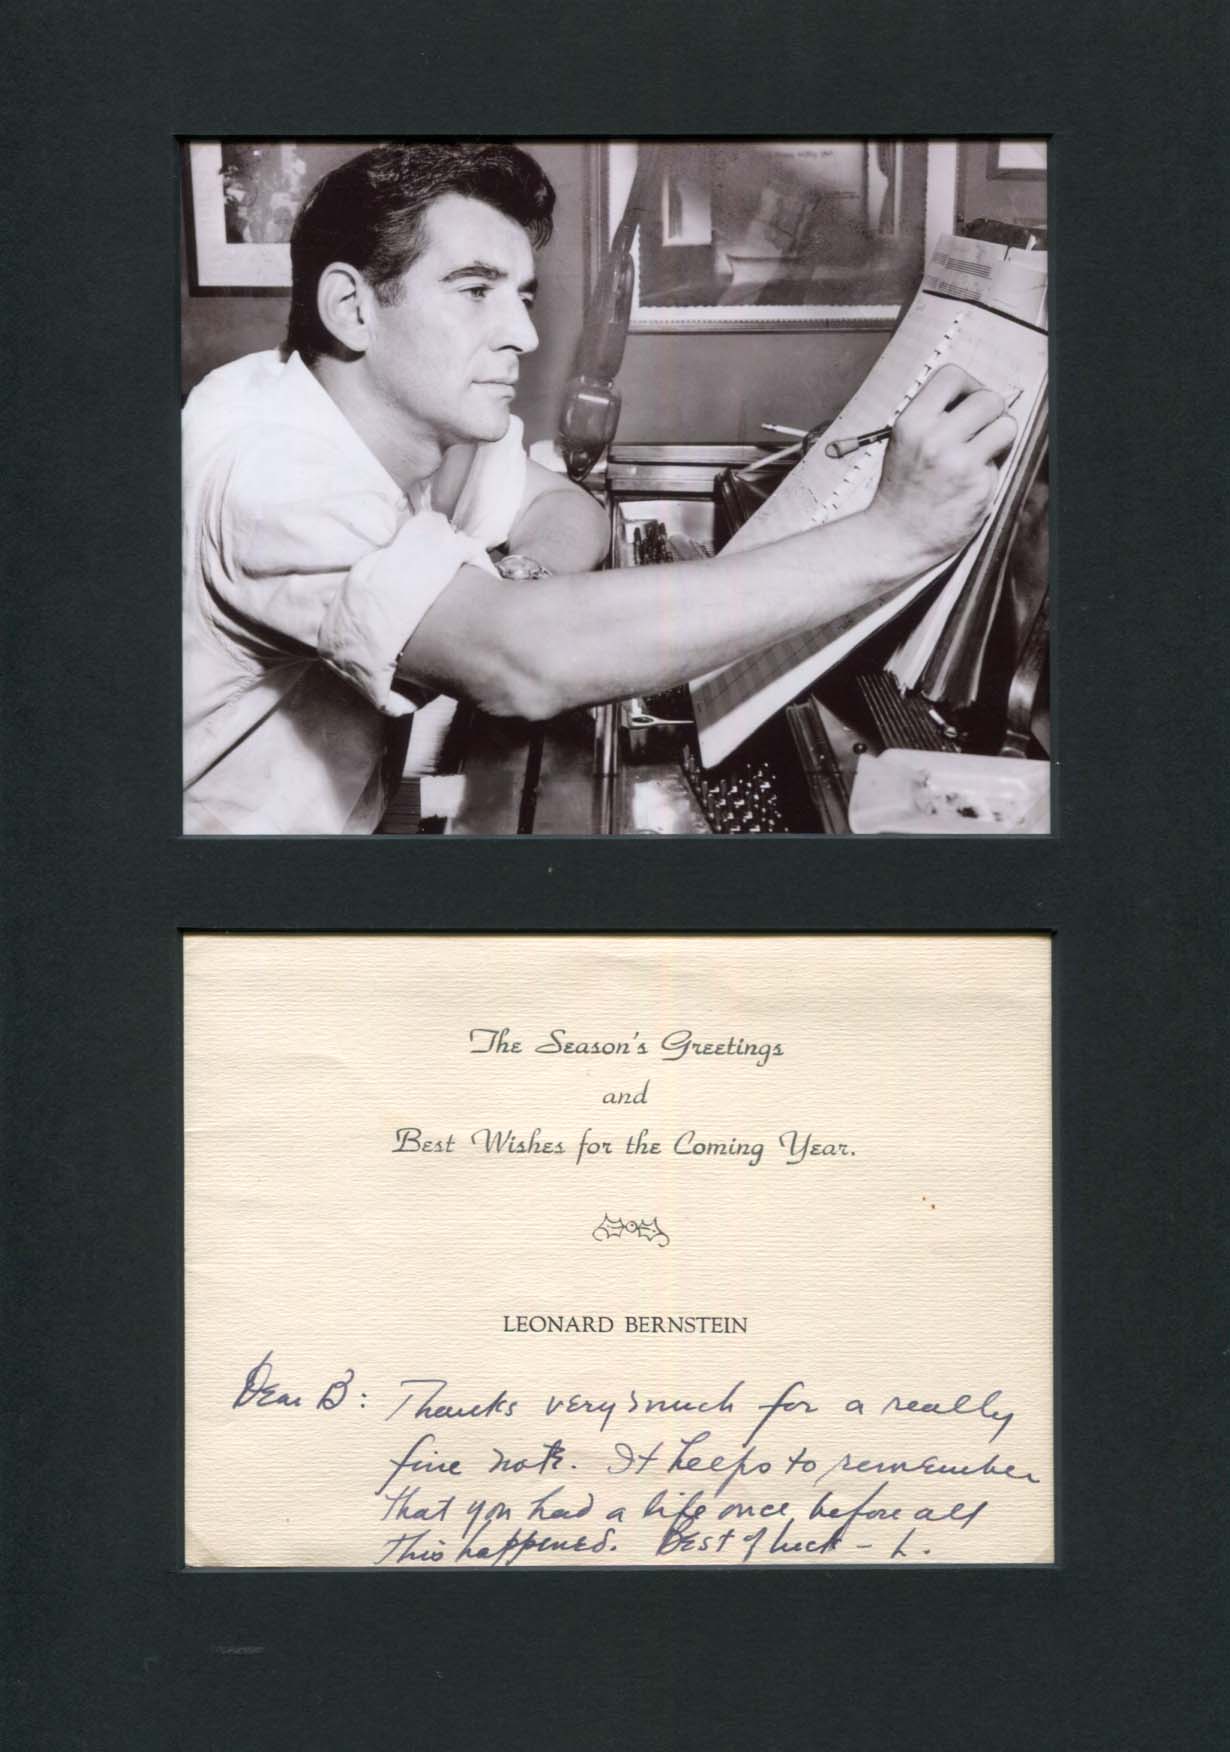 Leonard Bernstein Autograph Autogramm | ID 7988394098837